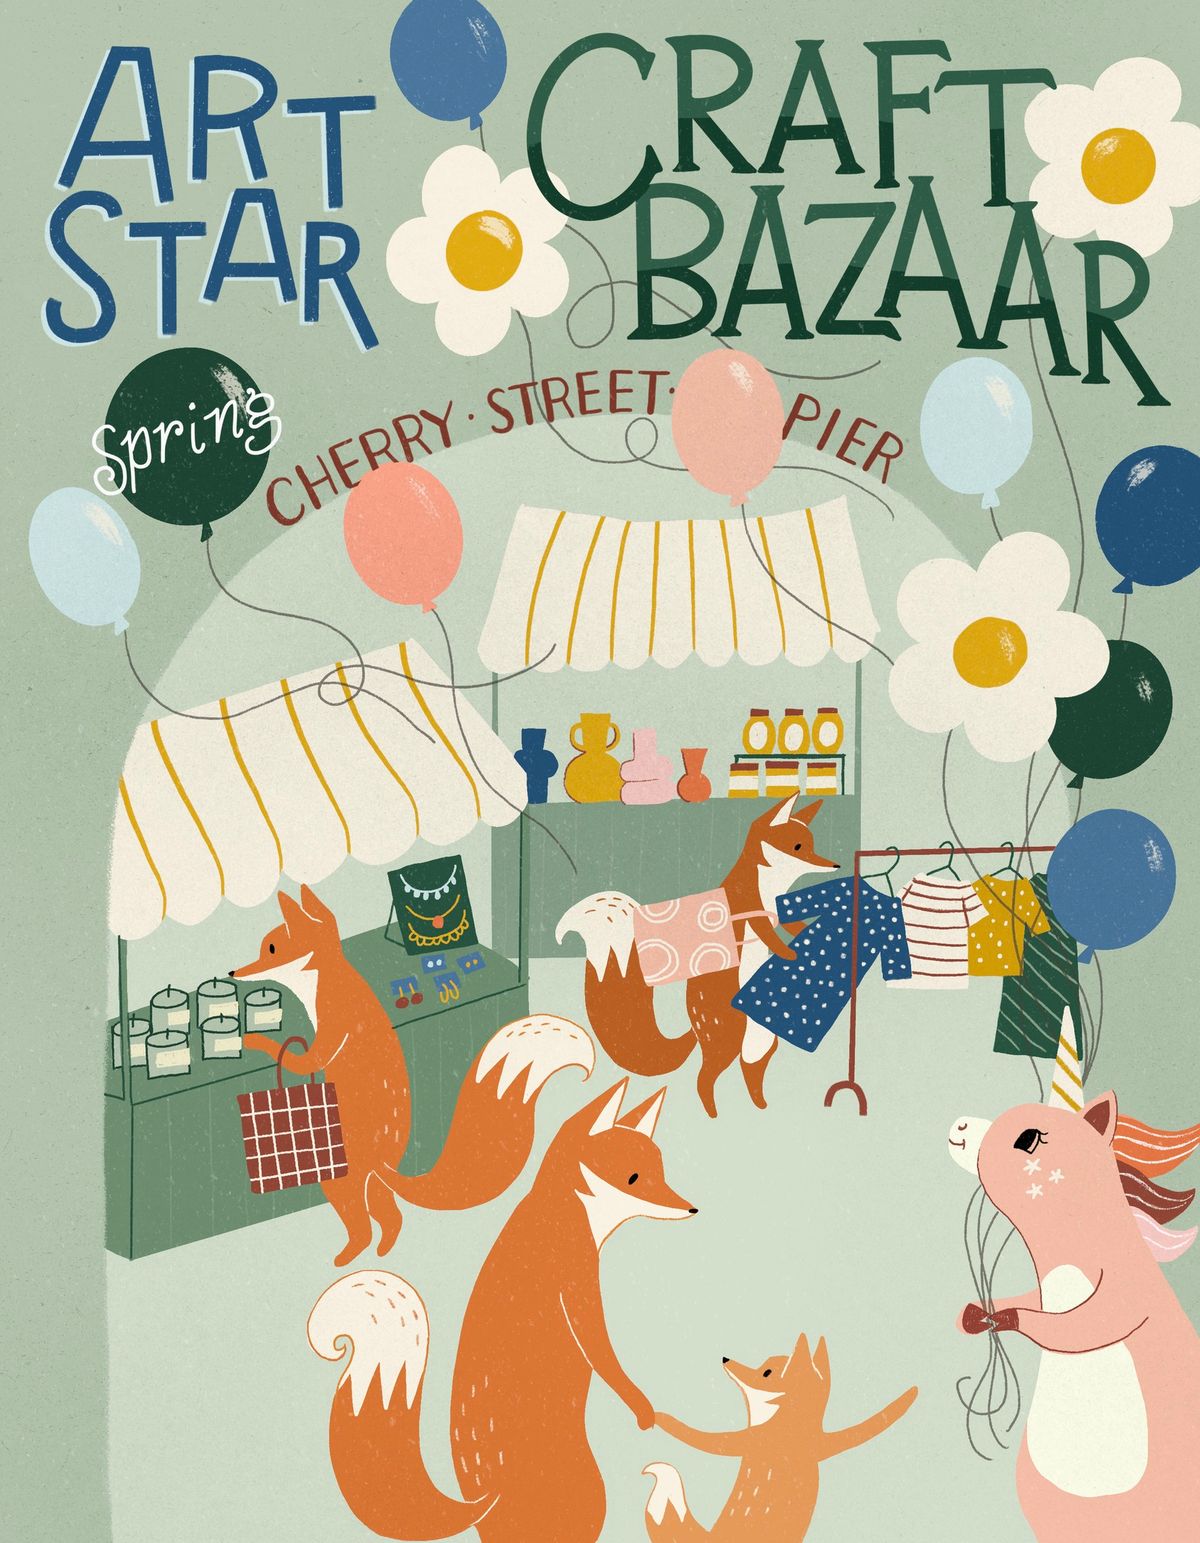 Spring Art Star Craft Bazaar 